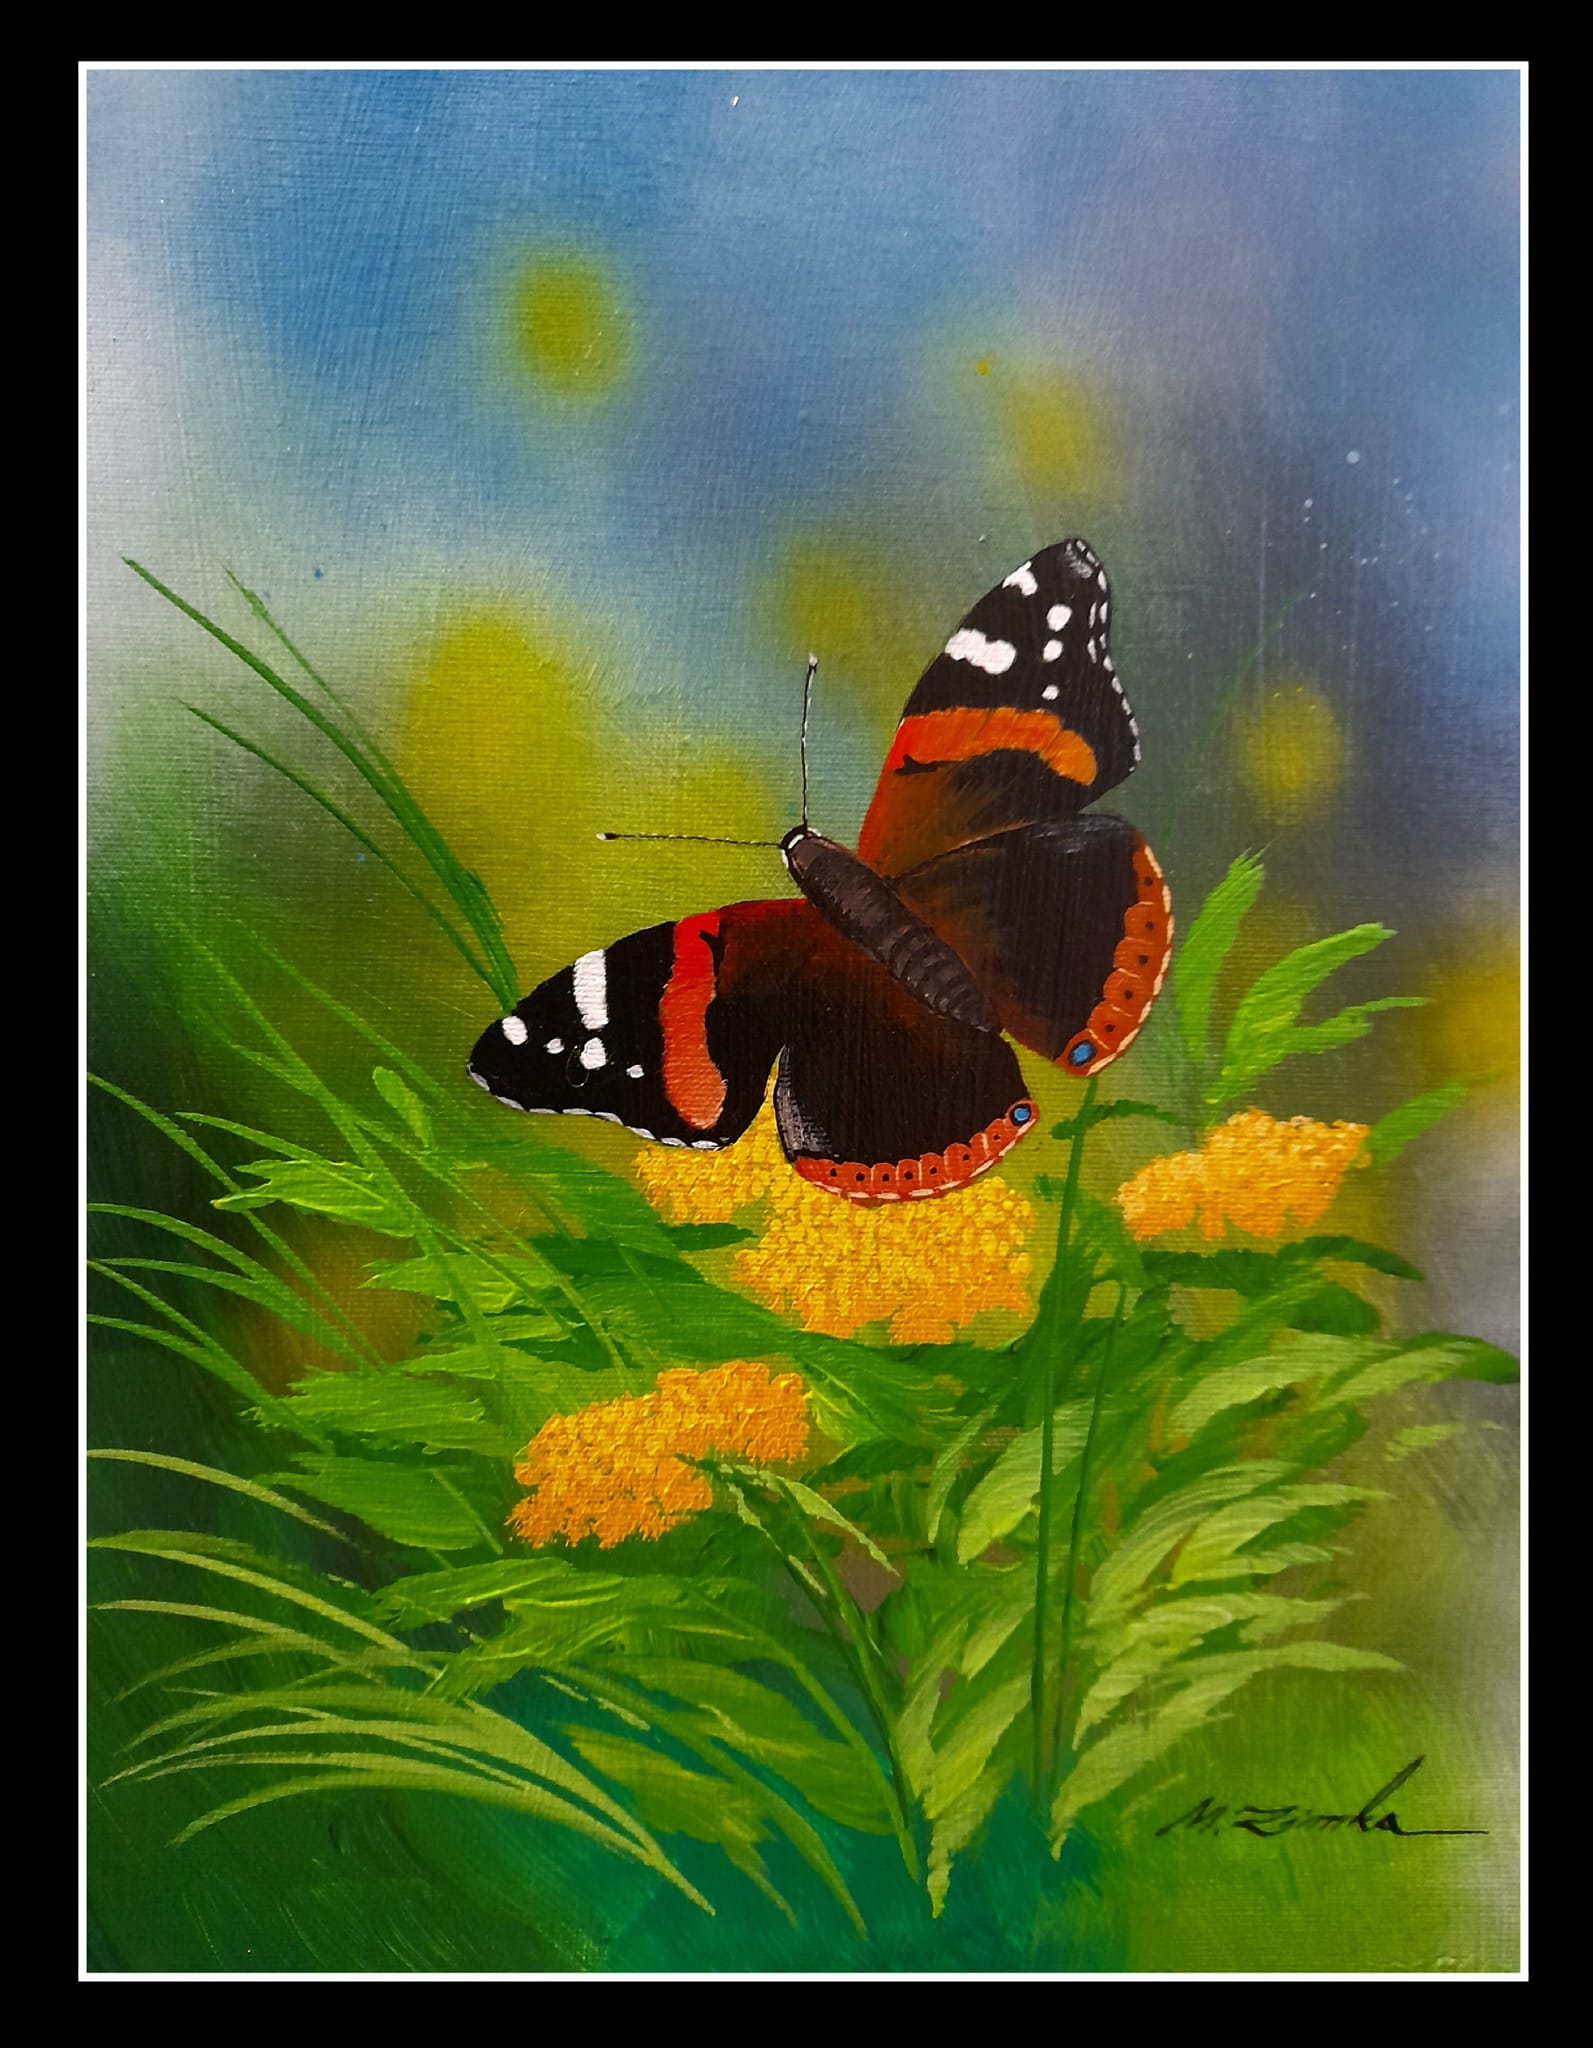 Motýl - malba akrylem na plátno - Autor Marek Zimka 0124 (2)